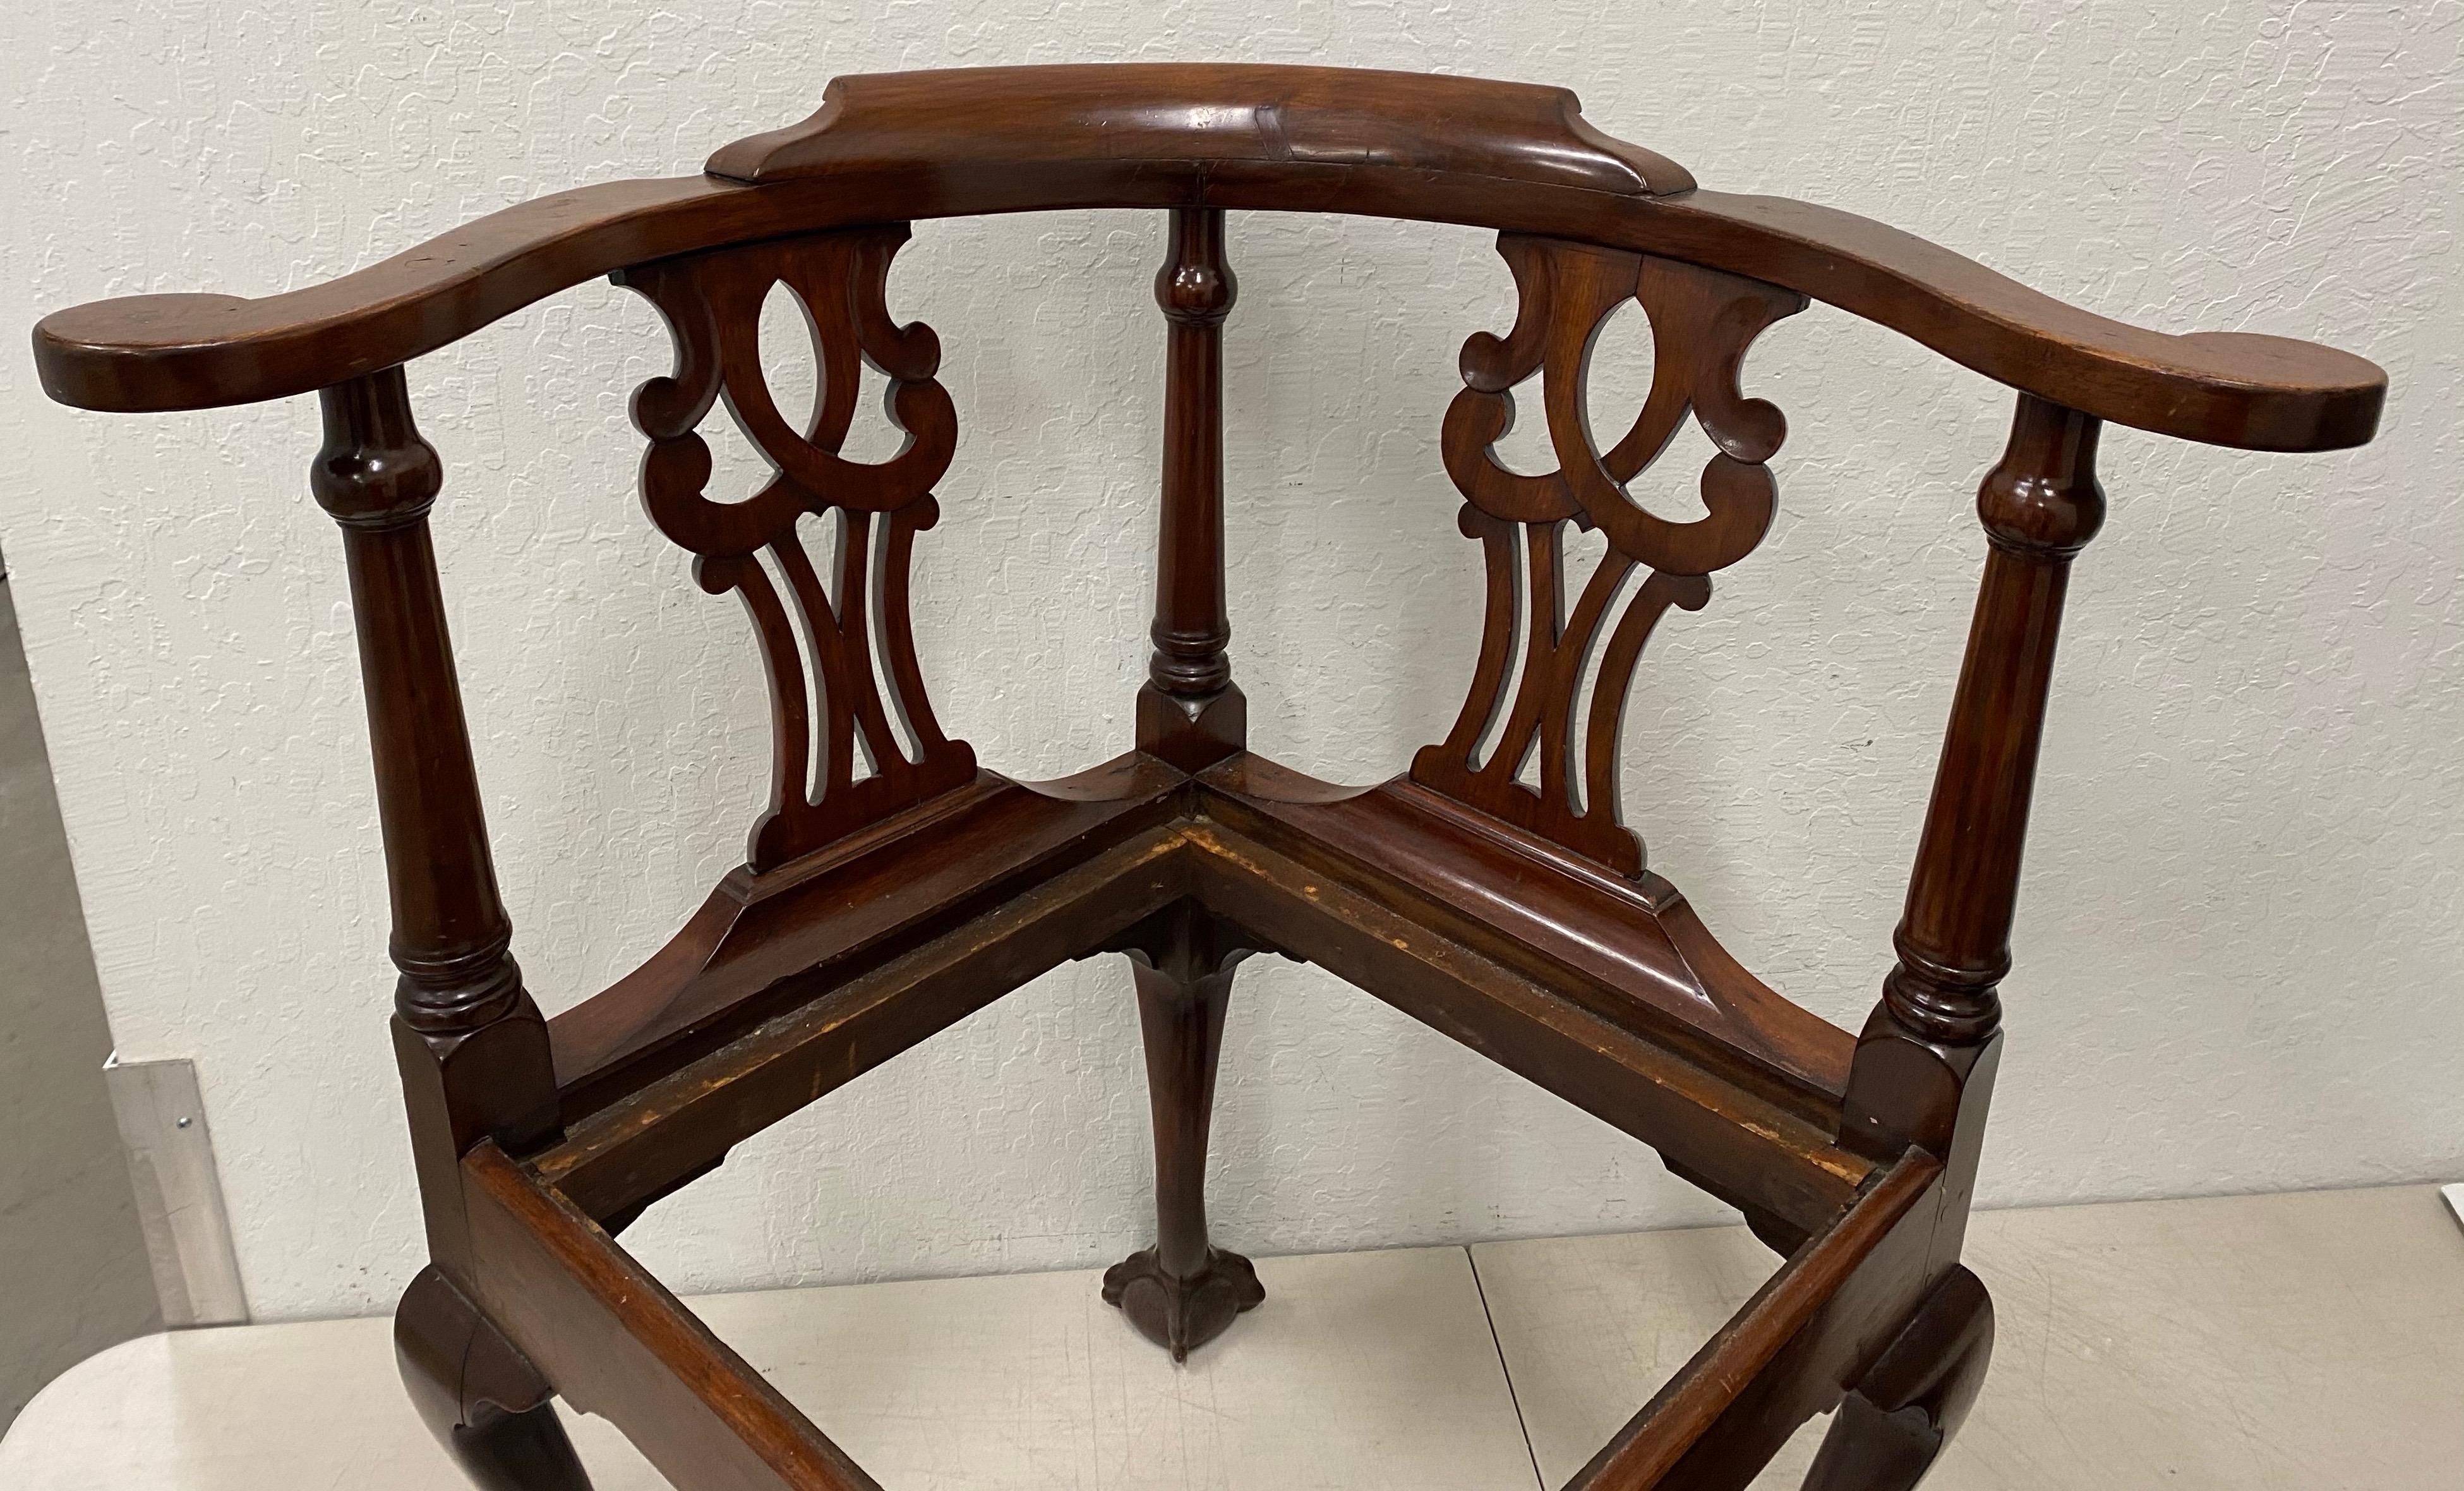 Mahogany Mid-19th Century American Chippendale Corner Chair, circa 1850s